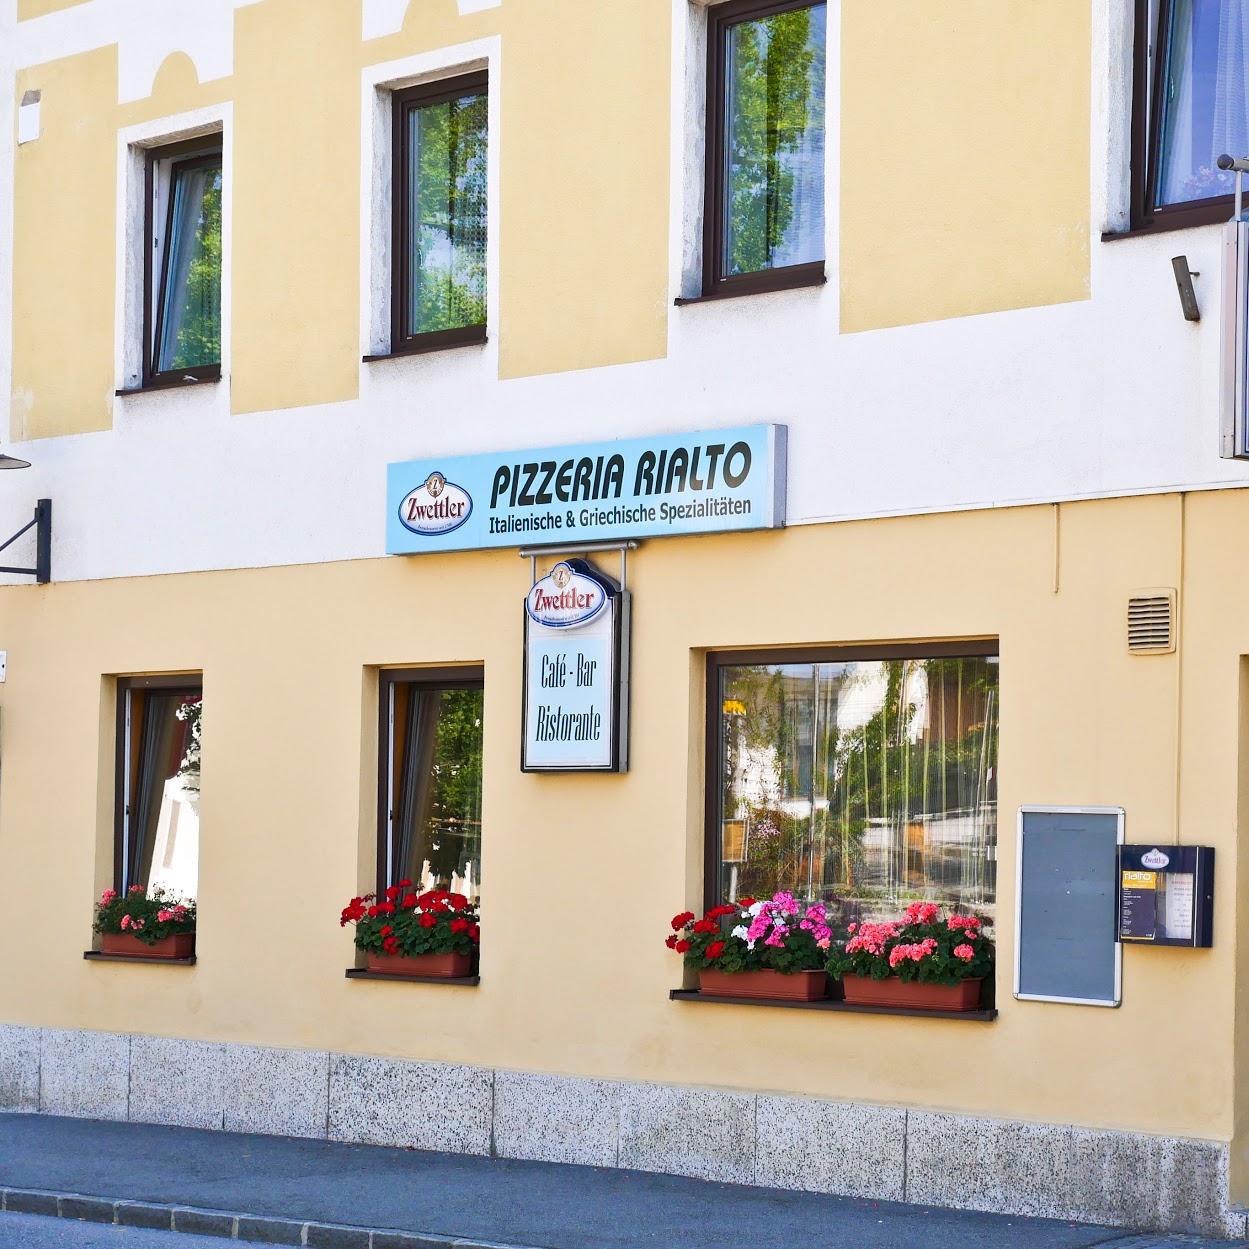 Restaurant "Pizzeria Rialto" in Groß Gerungs